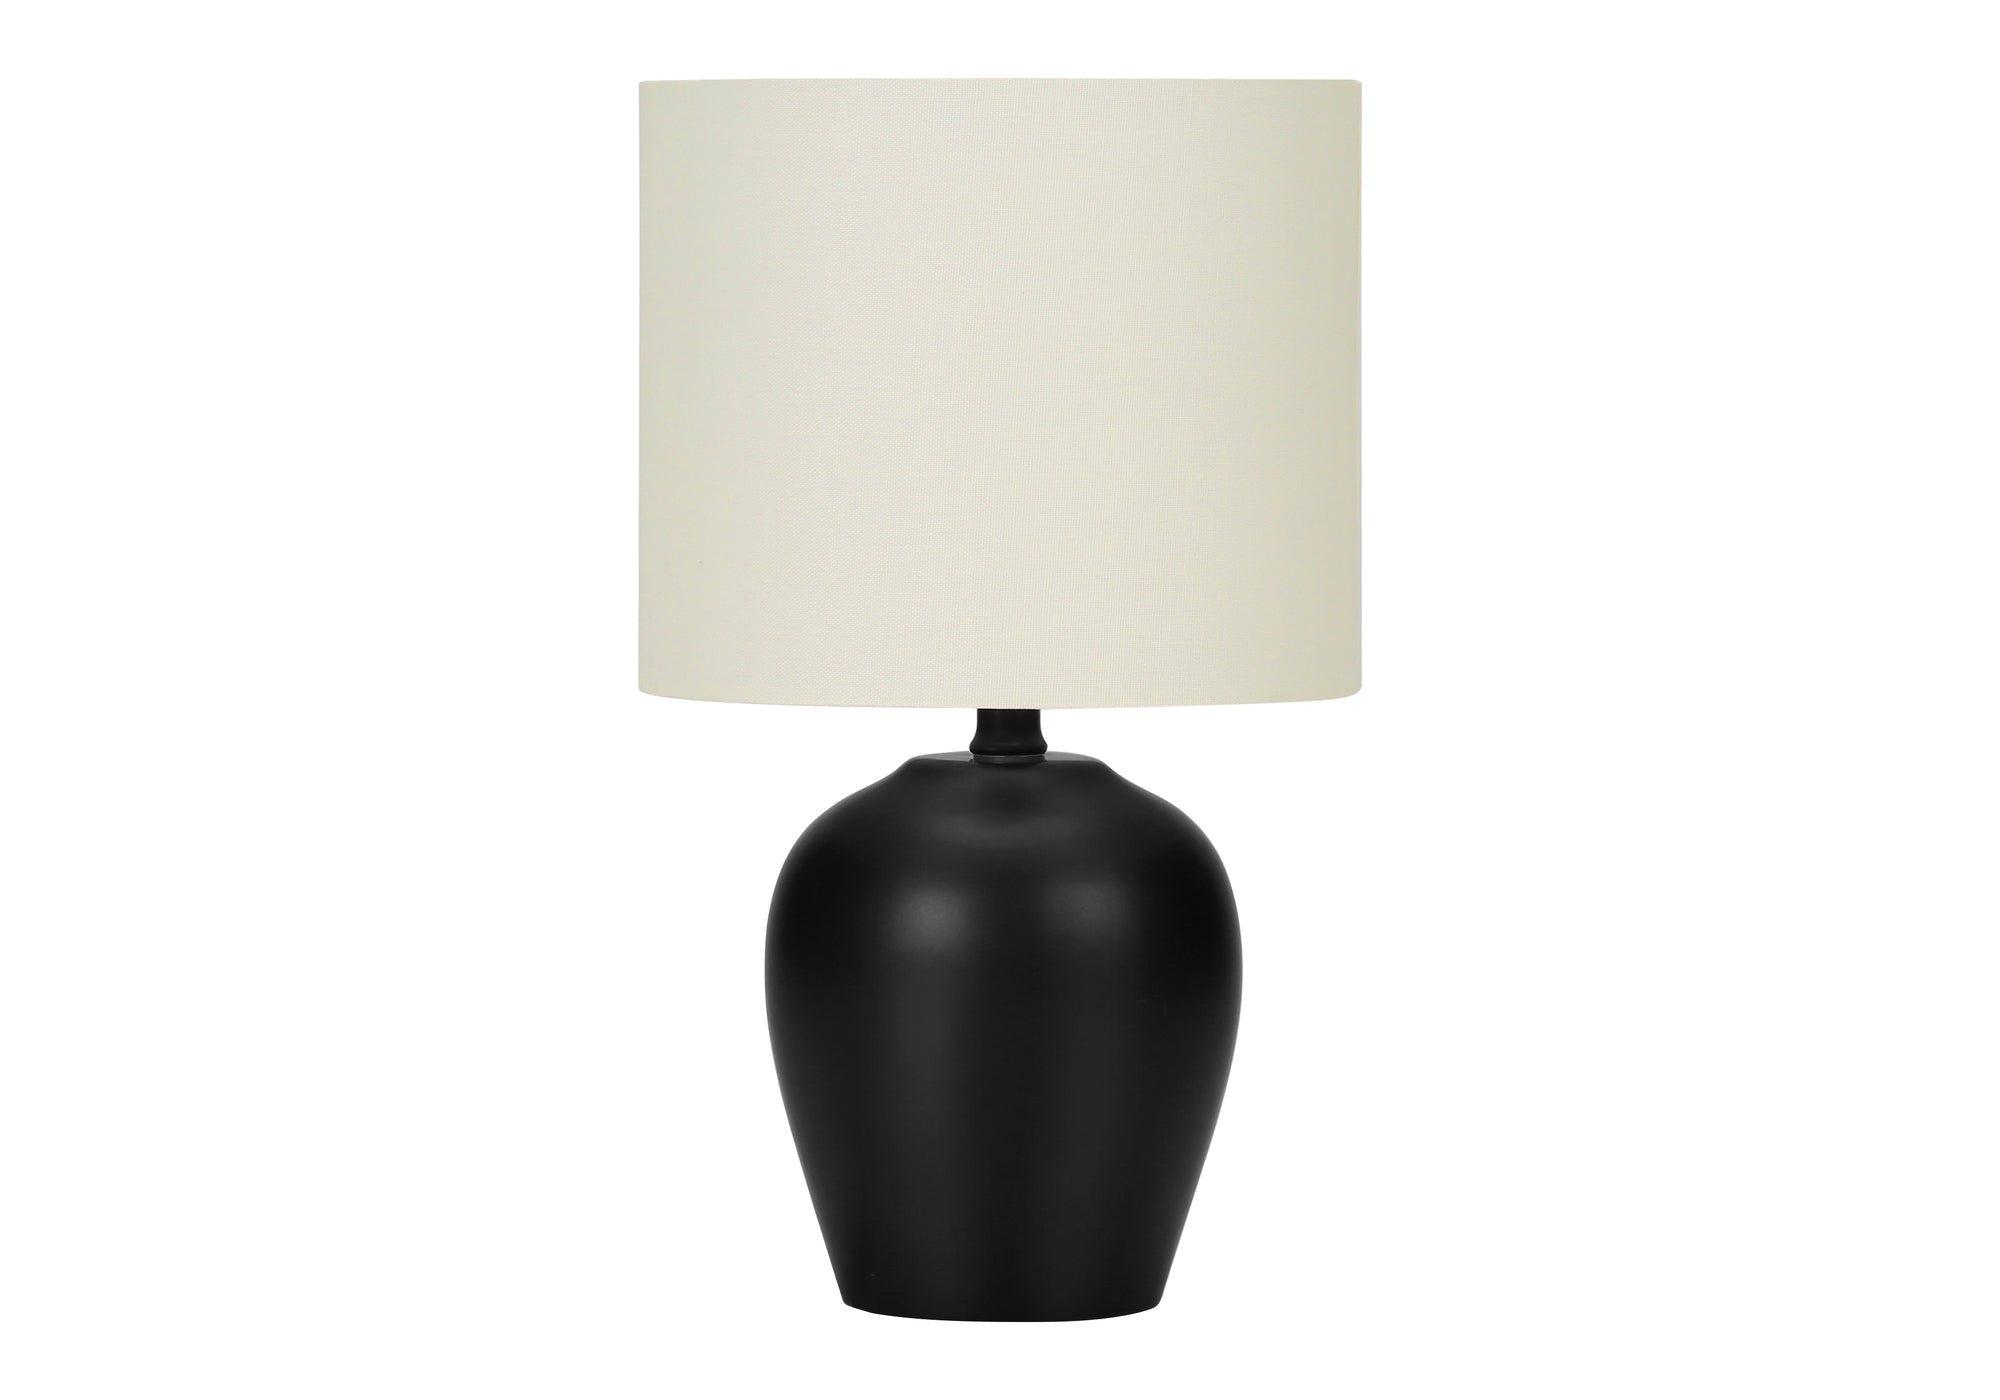 MN-719738    Lighting, 17"H, Table Lamp, Black Ceramic, Ivory / Cream Shade, Transitional